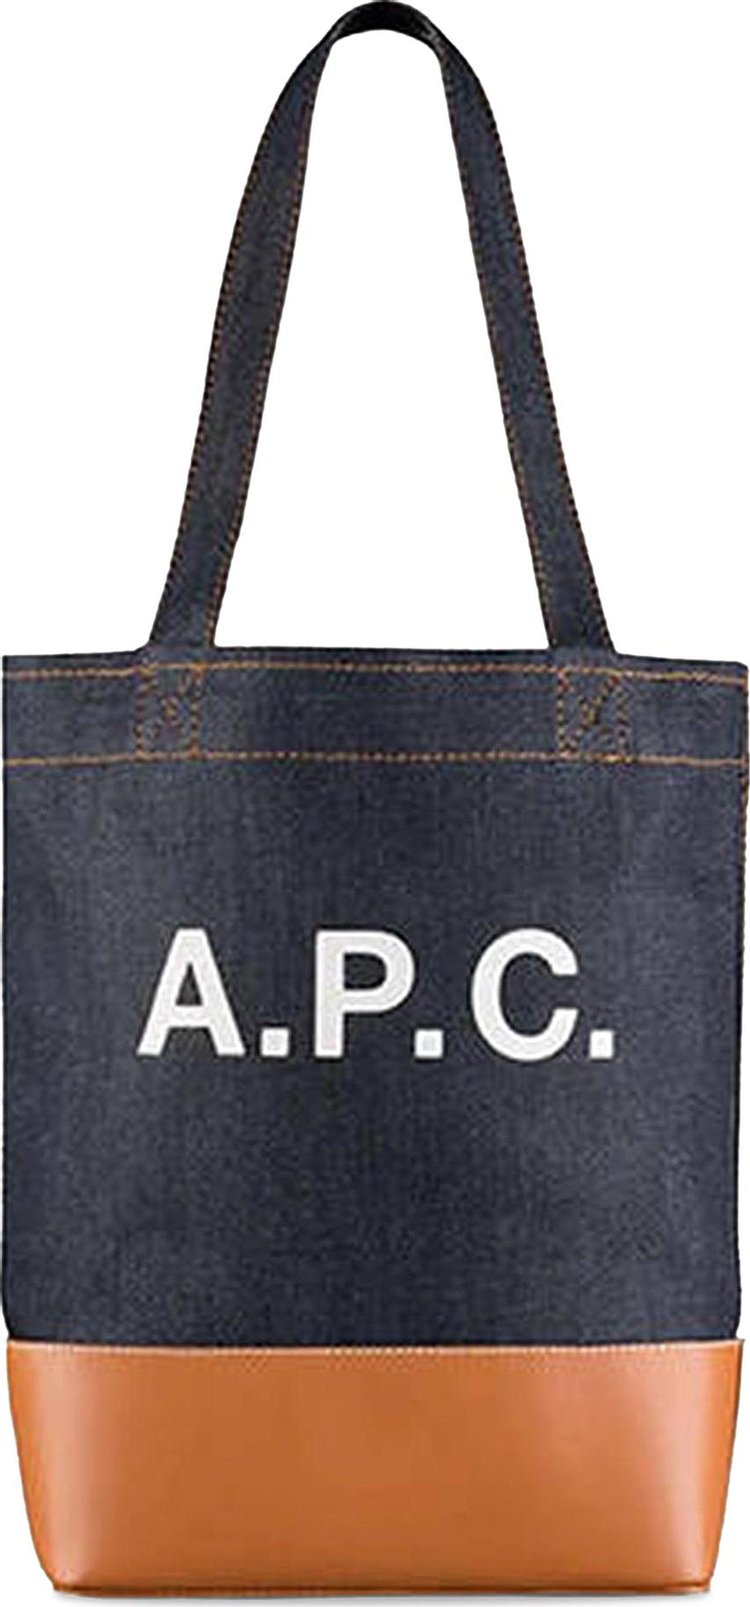 A.P.C. Axel Small Tote Bag 'Caramel'